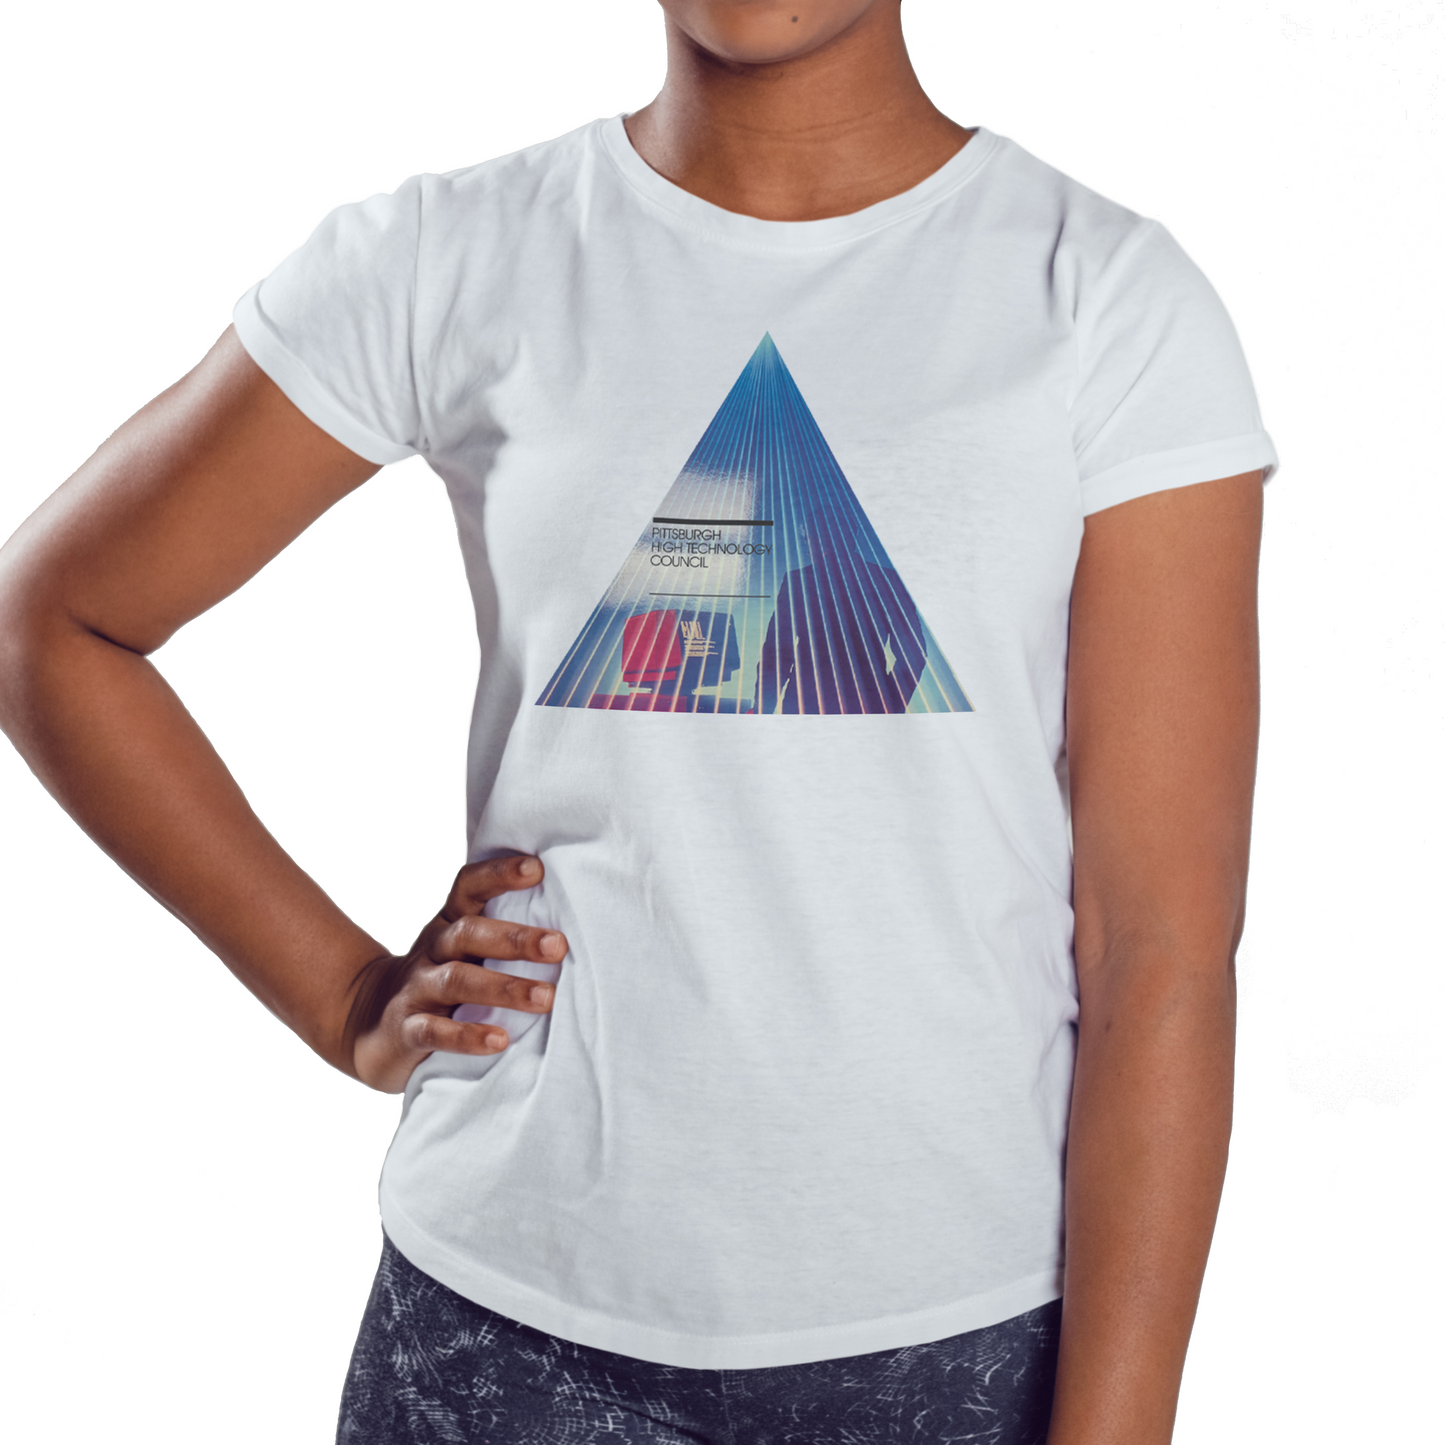 Retro Triangle Pittsburgh High Technology Council Women's T-Shirt